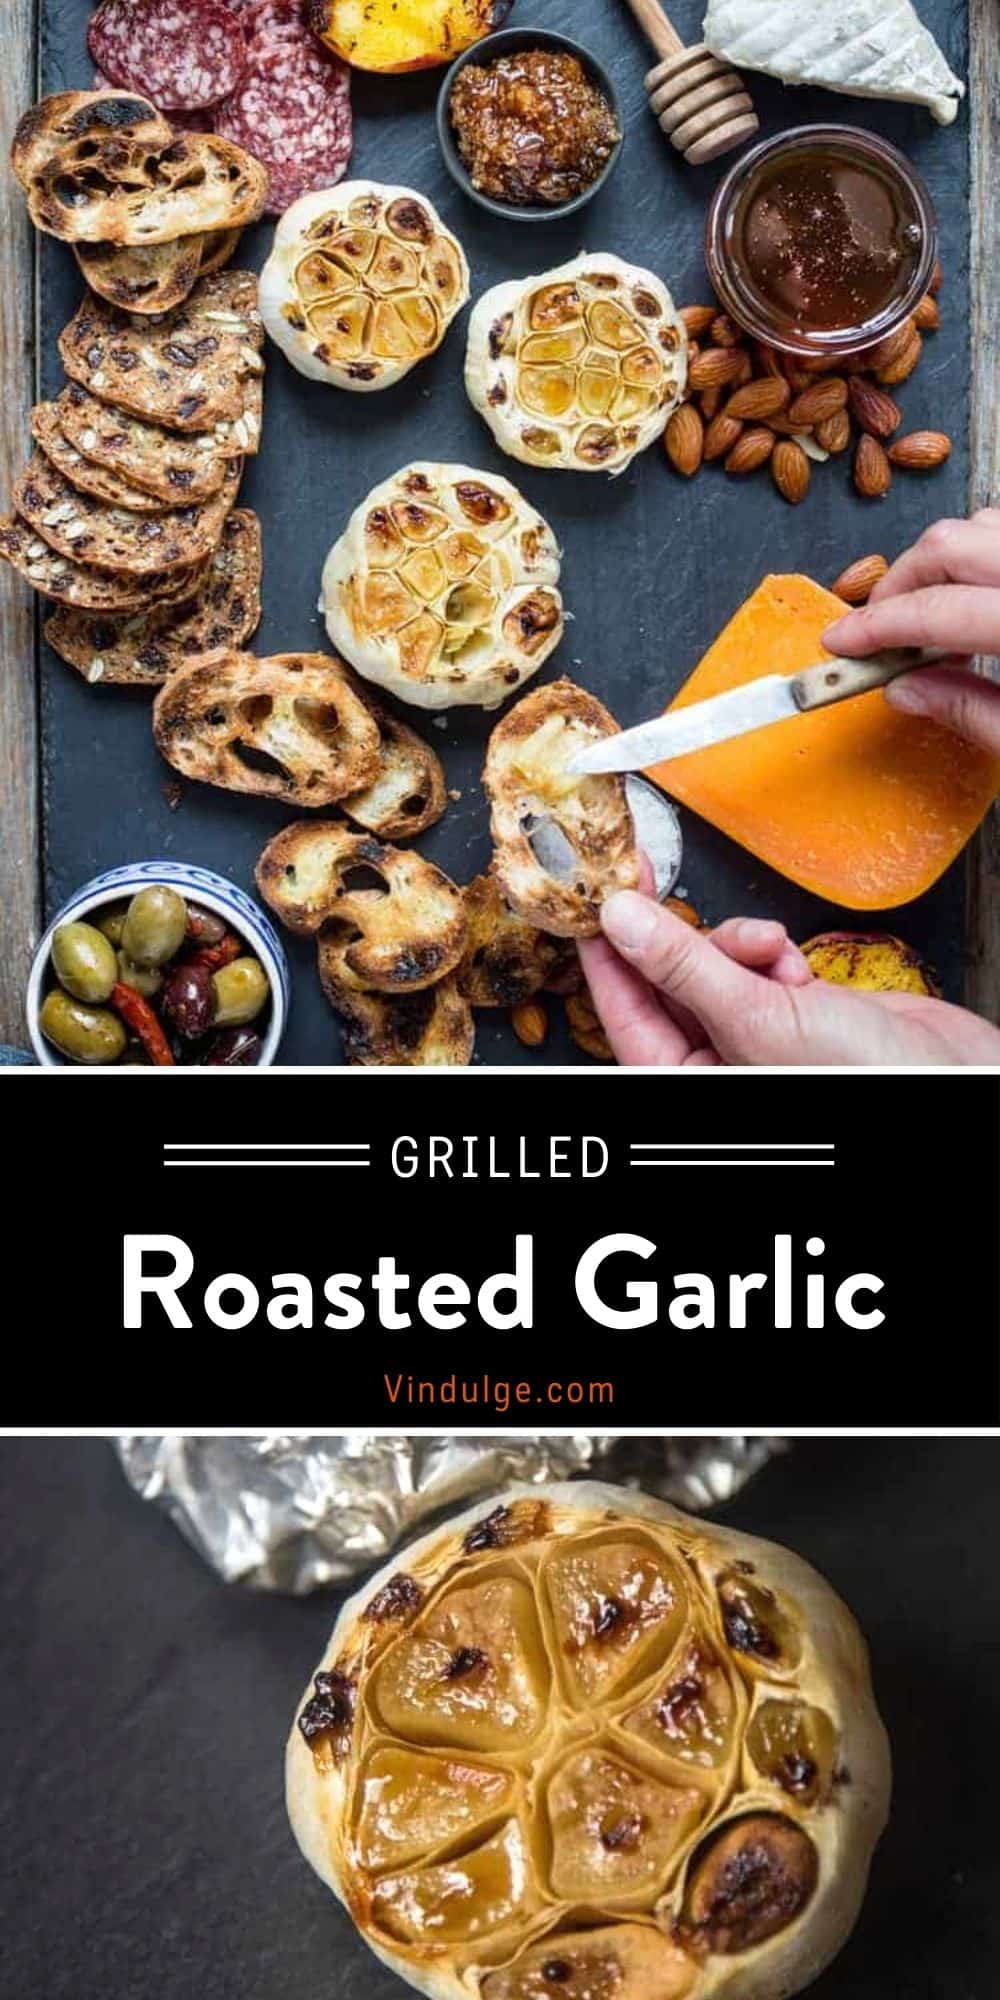 Roasted Garlic - How to roast garlic on The Grill! - Vindulge